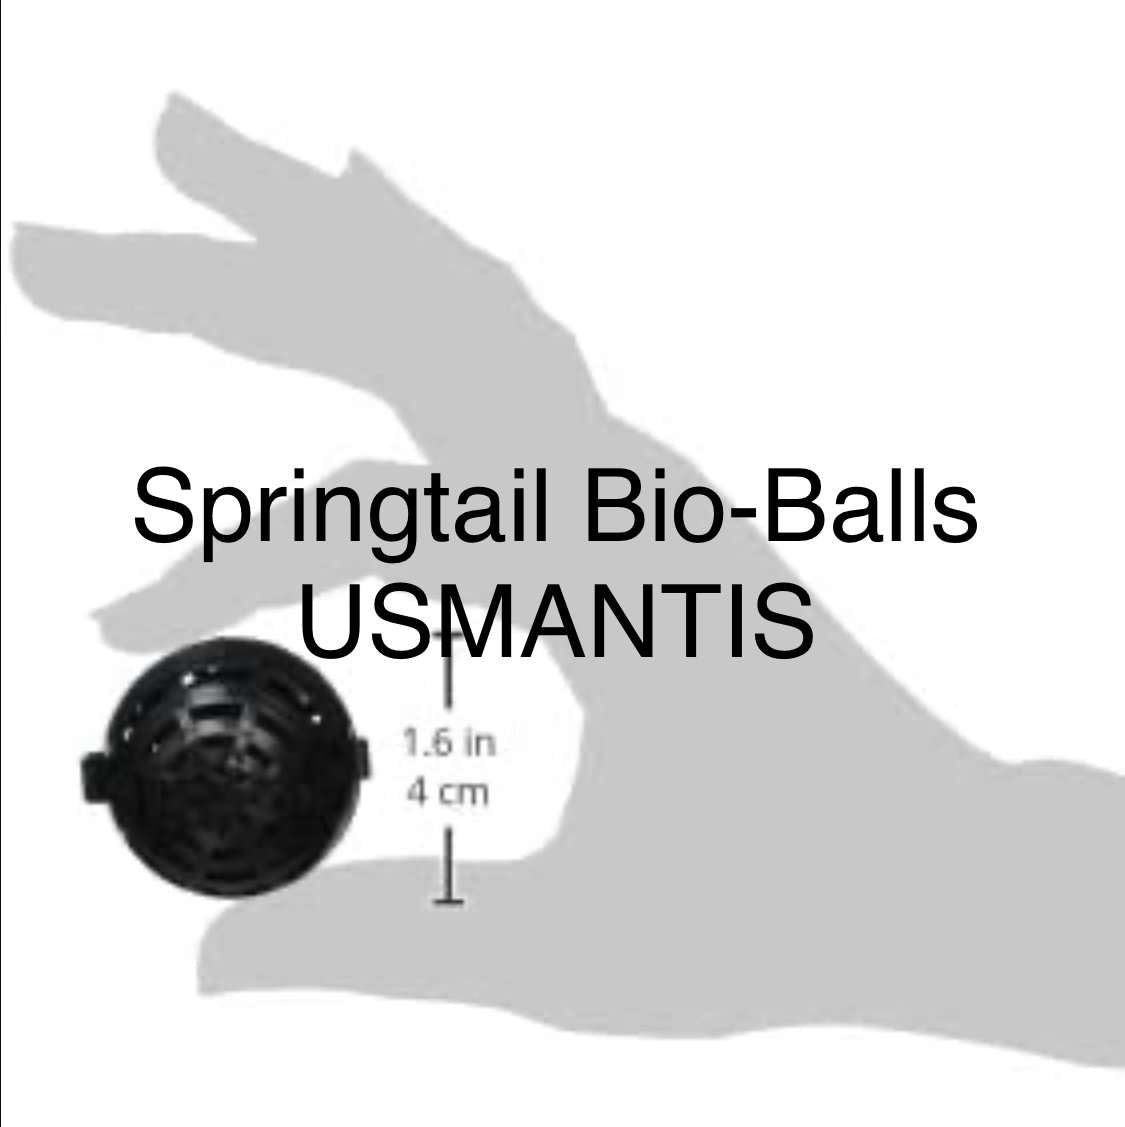 Bioactive Balls Springtail Spawning Spheres NEW PRODUCT bioballs! - USMANTIS